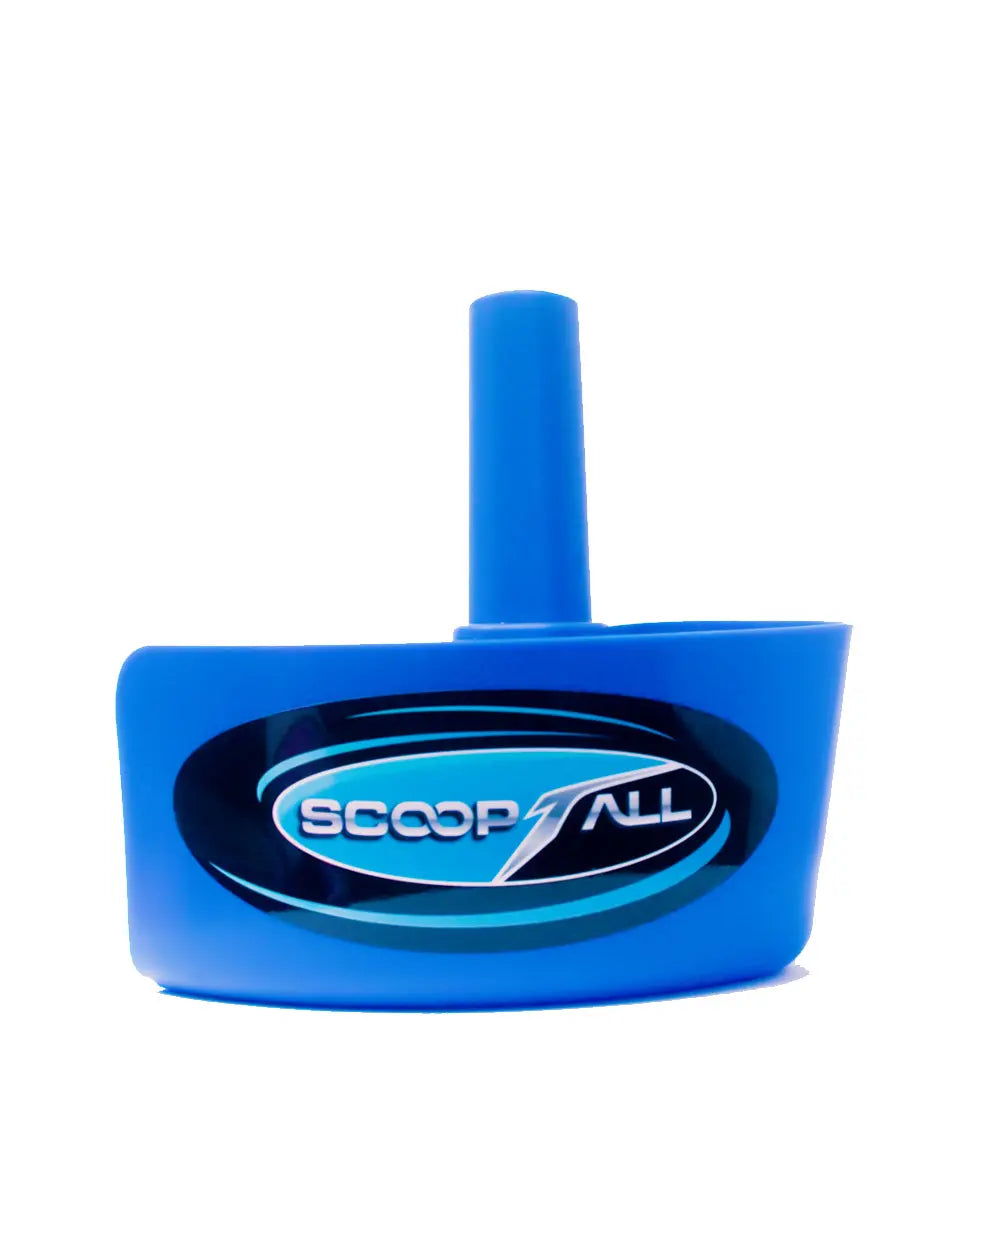 Scoop-T-ALL scooptall.com